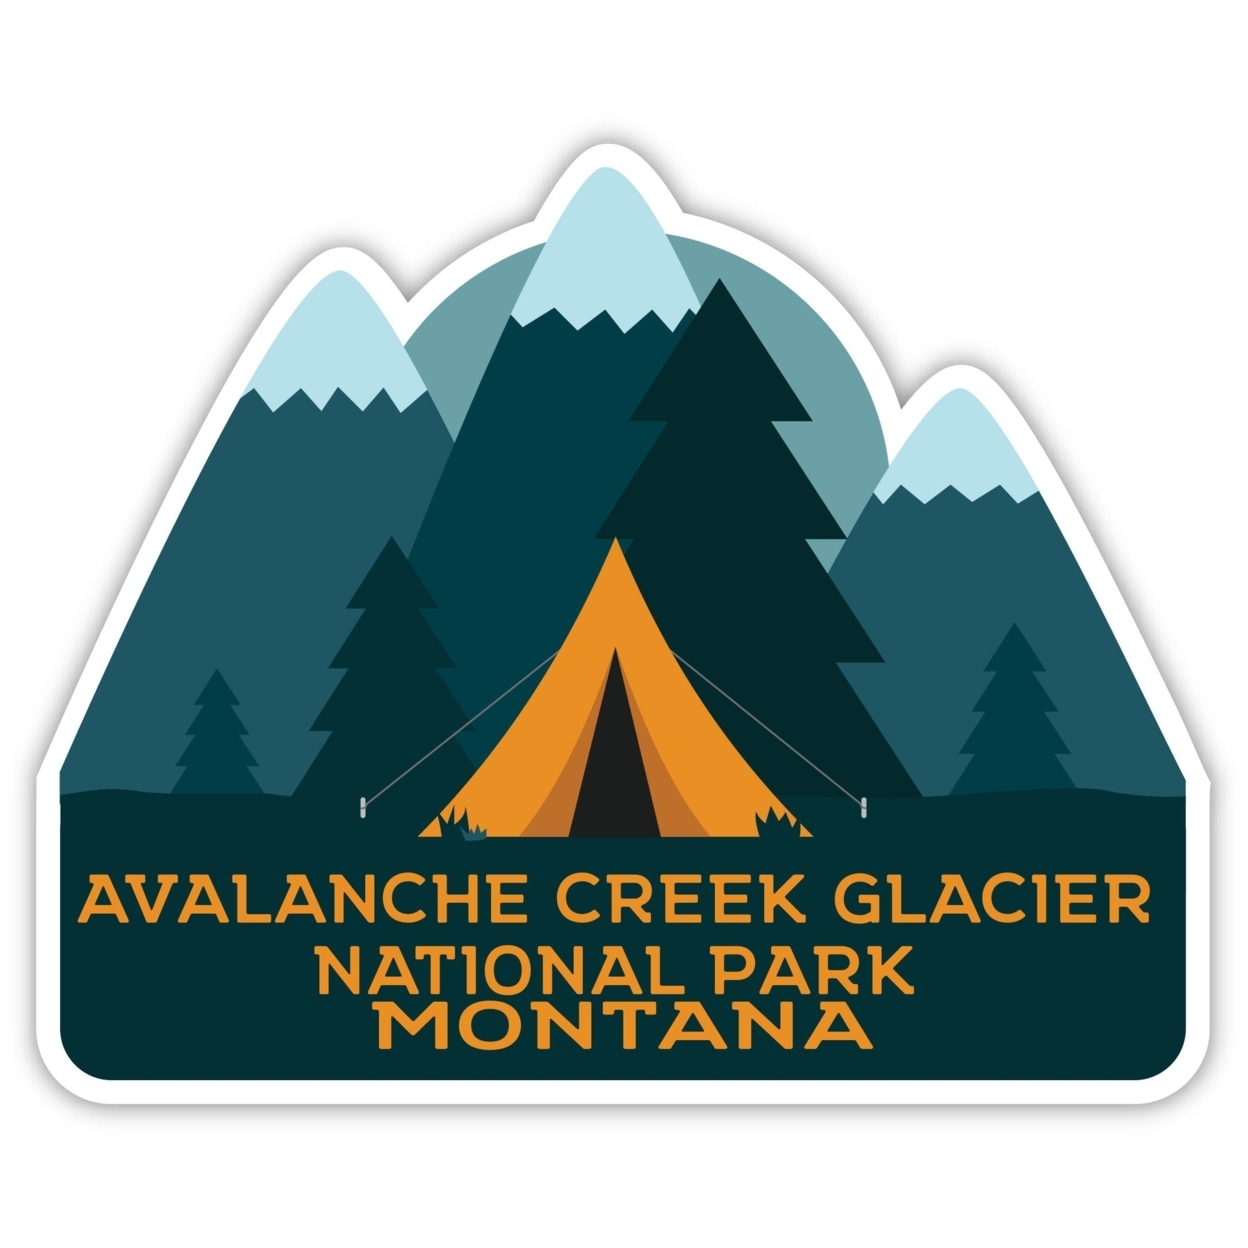 Avalanche Creek Glacier National Park Montana Souvenir Decorative Stickers (Choose Theme And Size) - 4-Pack, 2-Inch, Tent